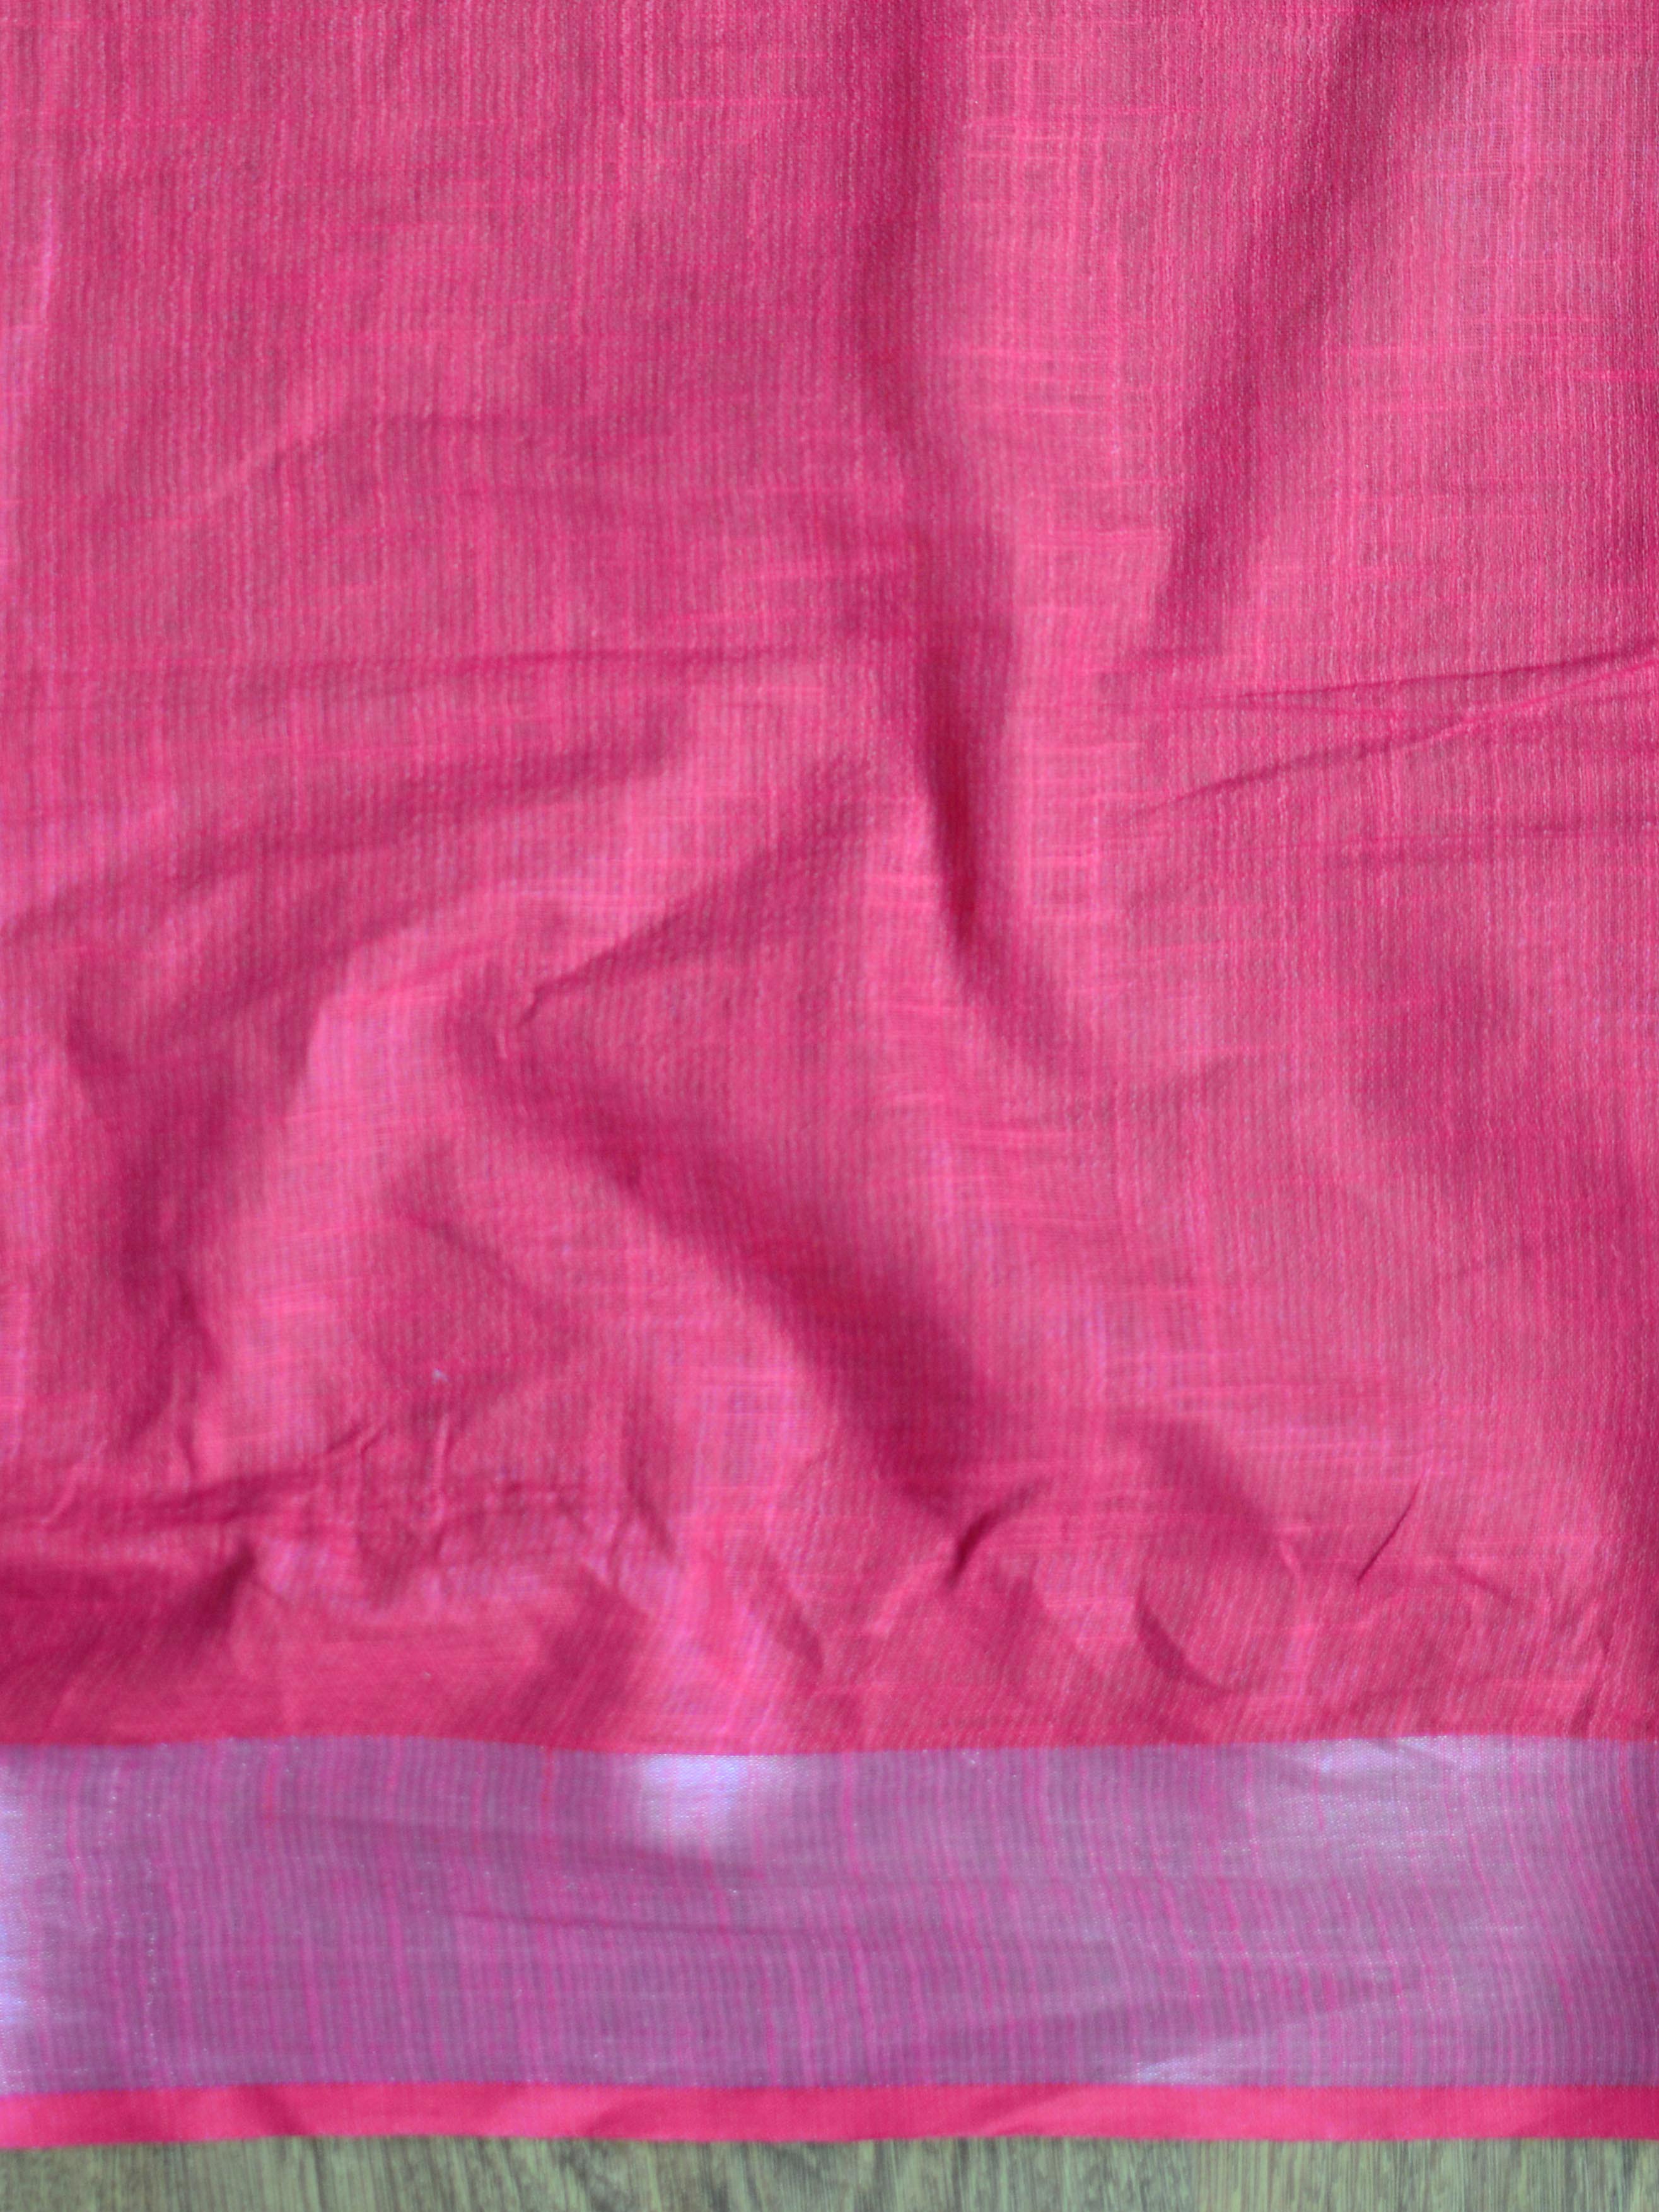 Bhagalpur Handloom Pure Linen Cotton Hand-Dyed Batik Pattern Saree-Red